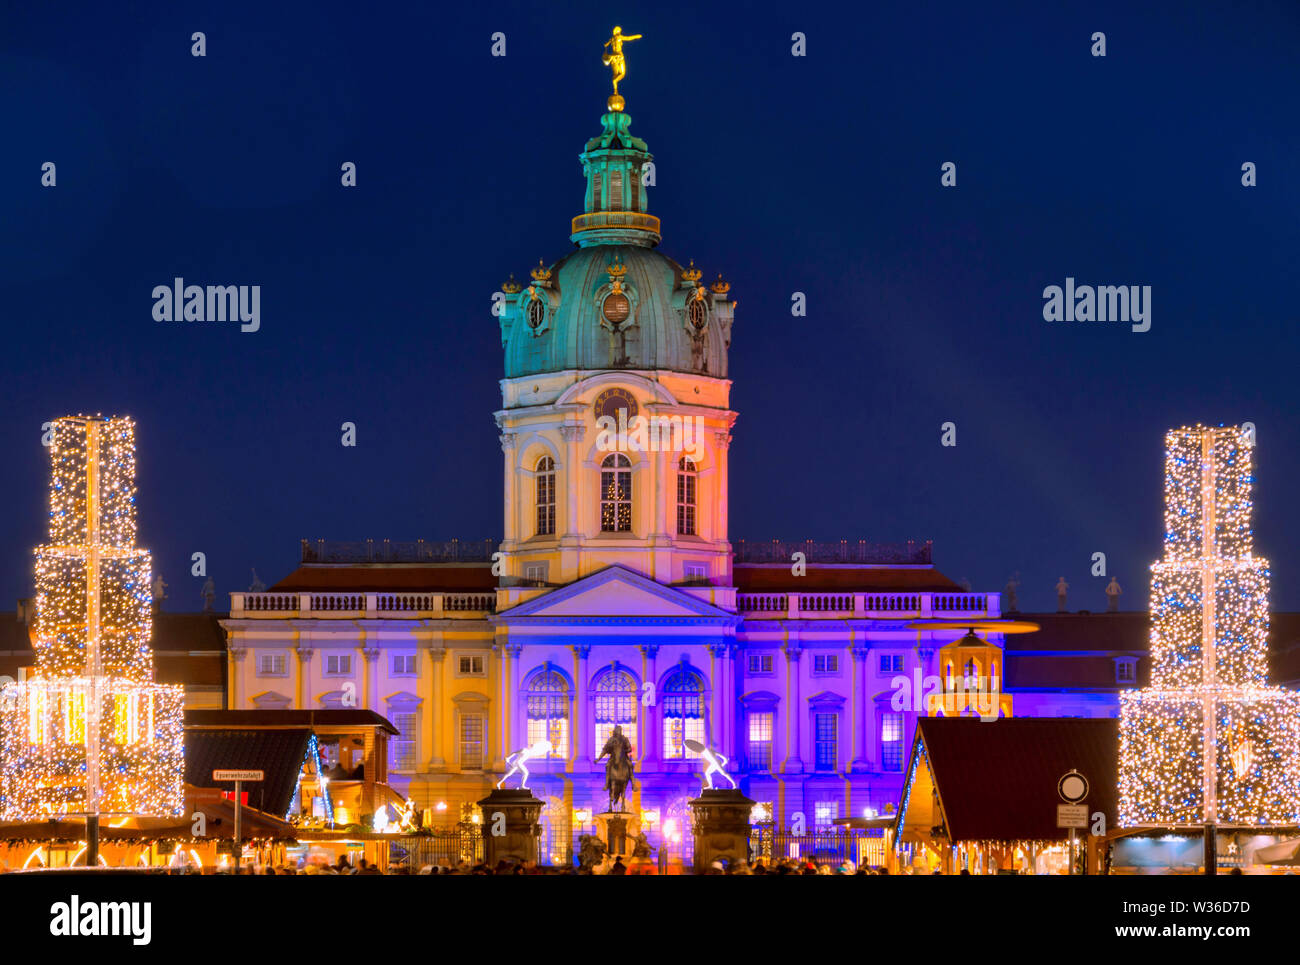 Traditional Christmas market at Schloss Charlottenburg castle, Berlin, Germany, Europe Stock Photo